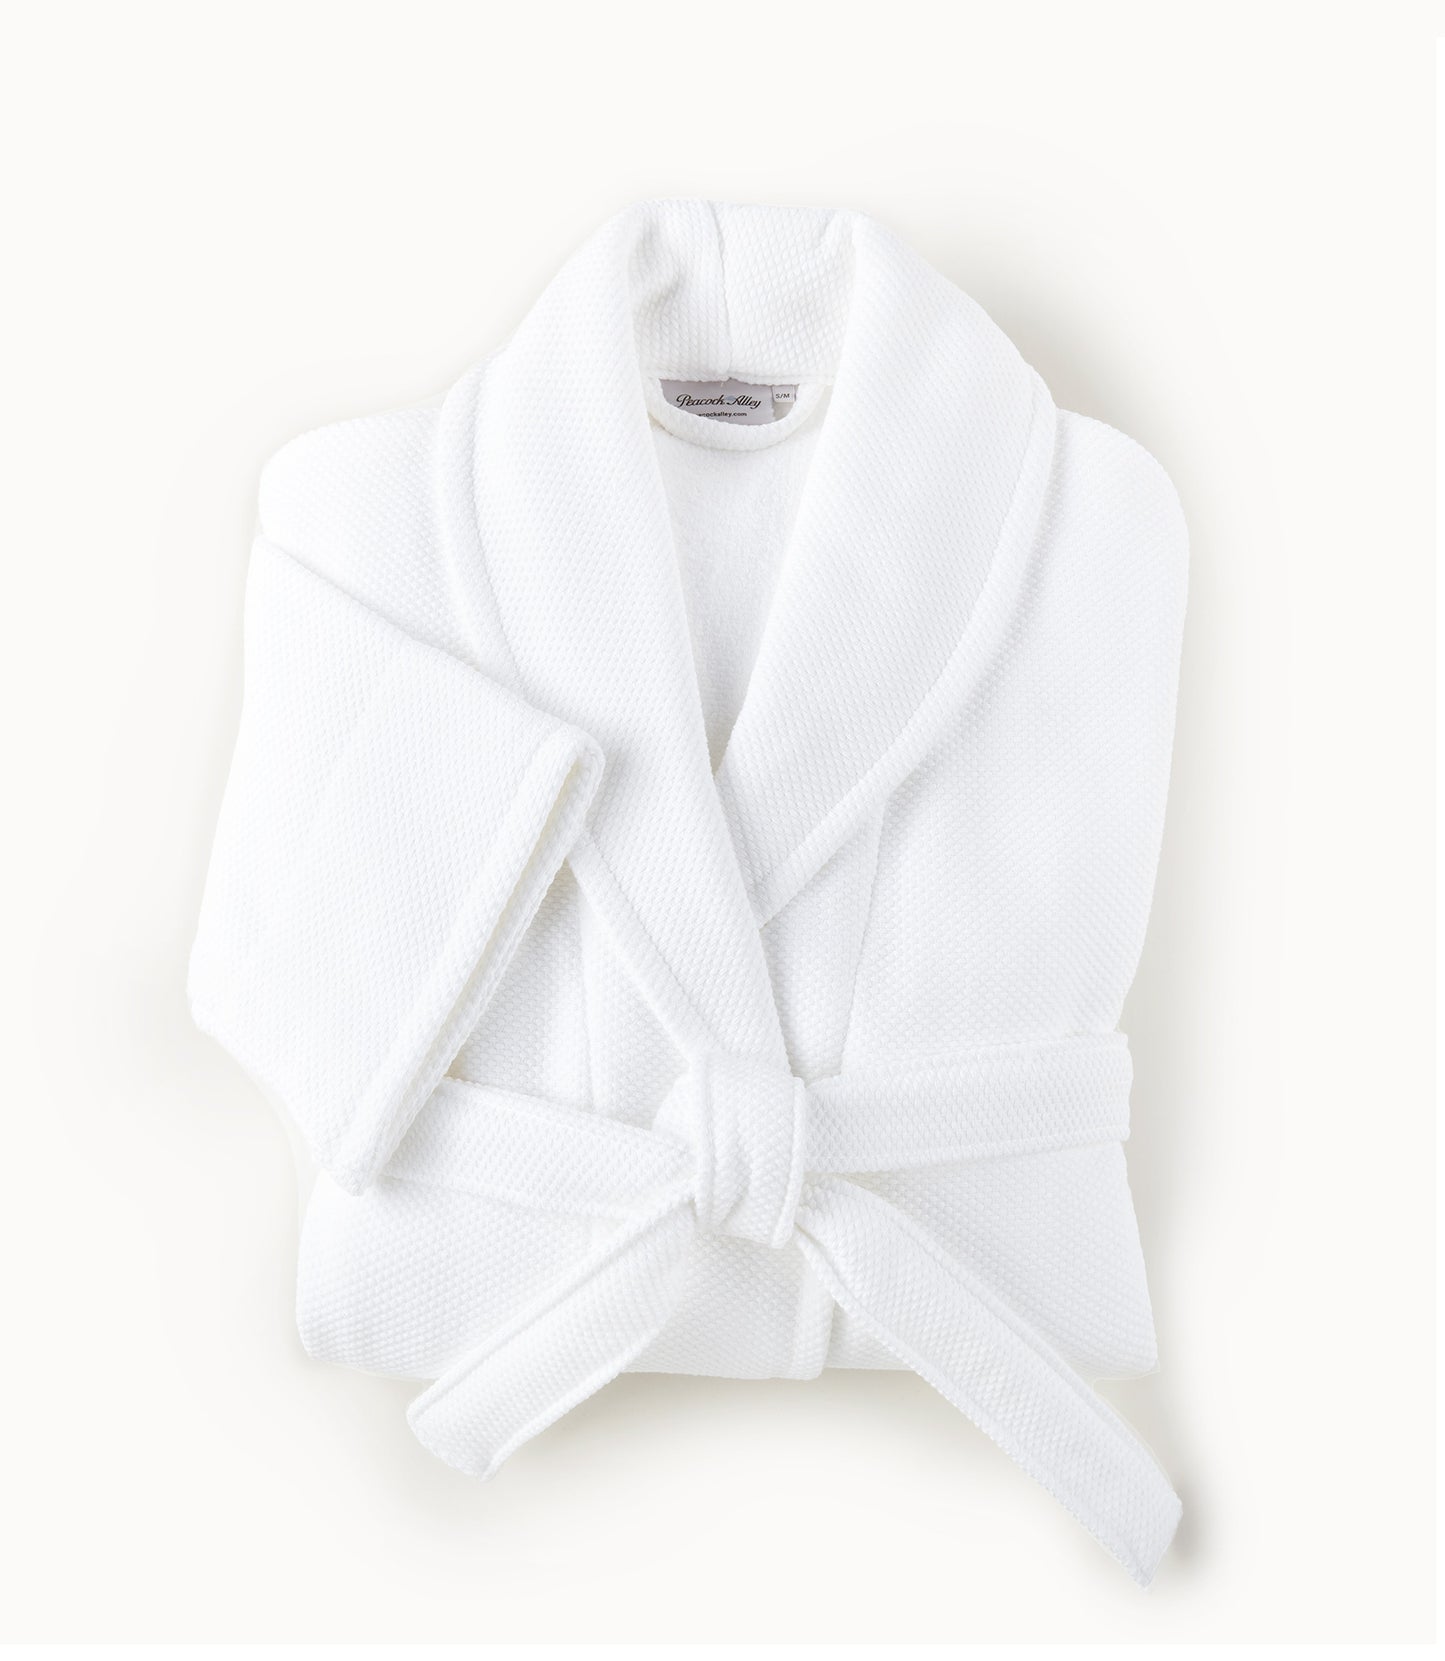 Folded White Spa Robe